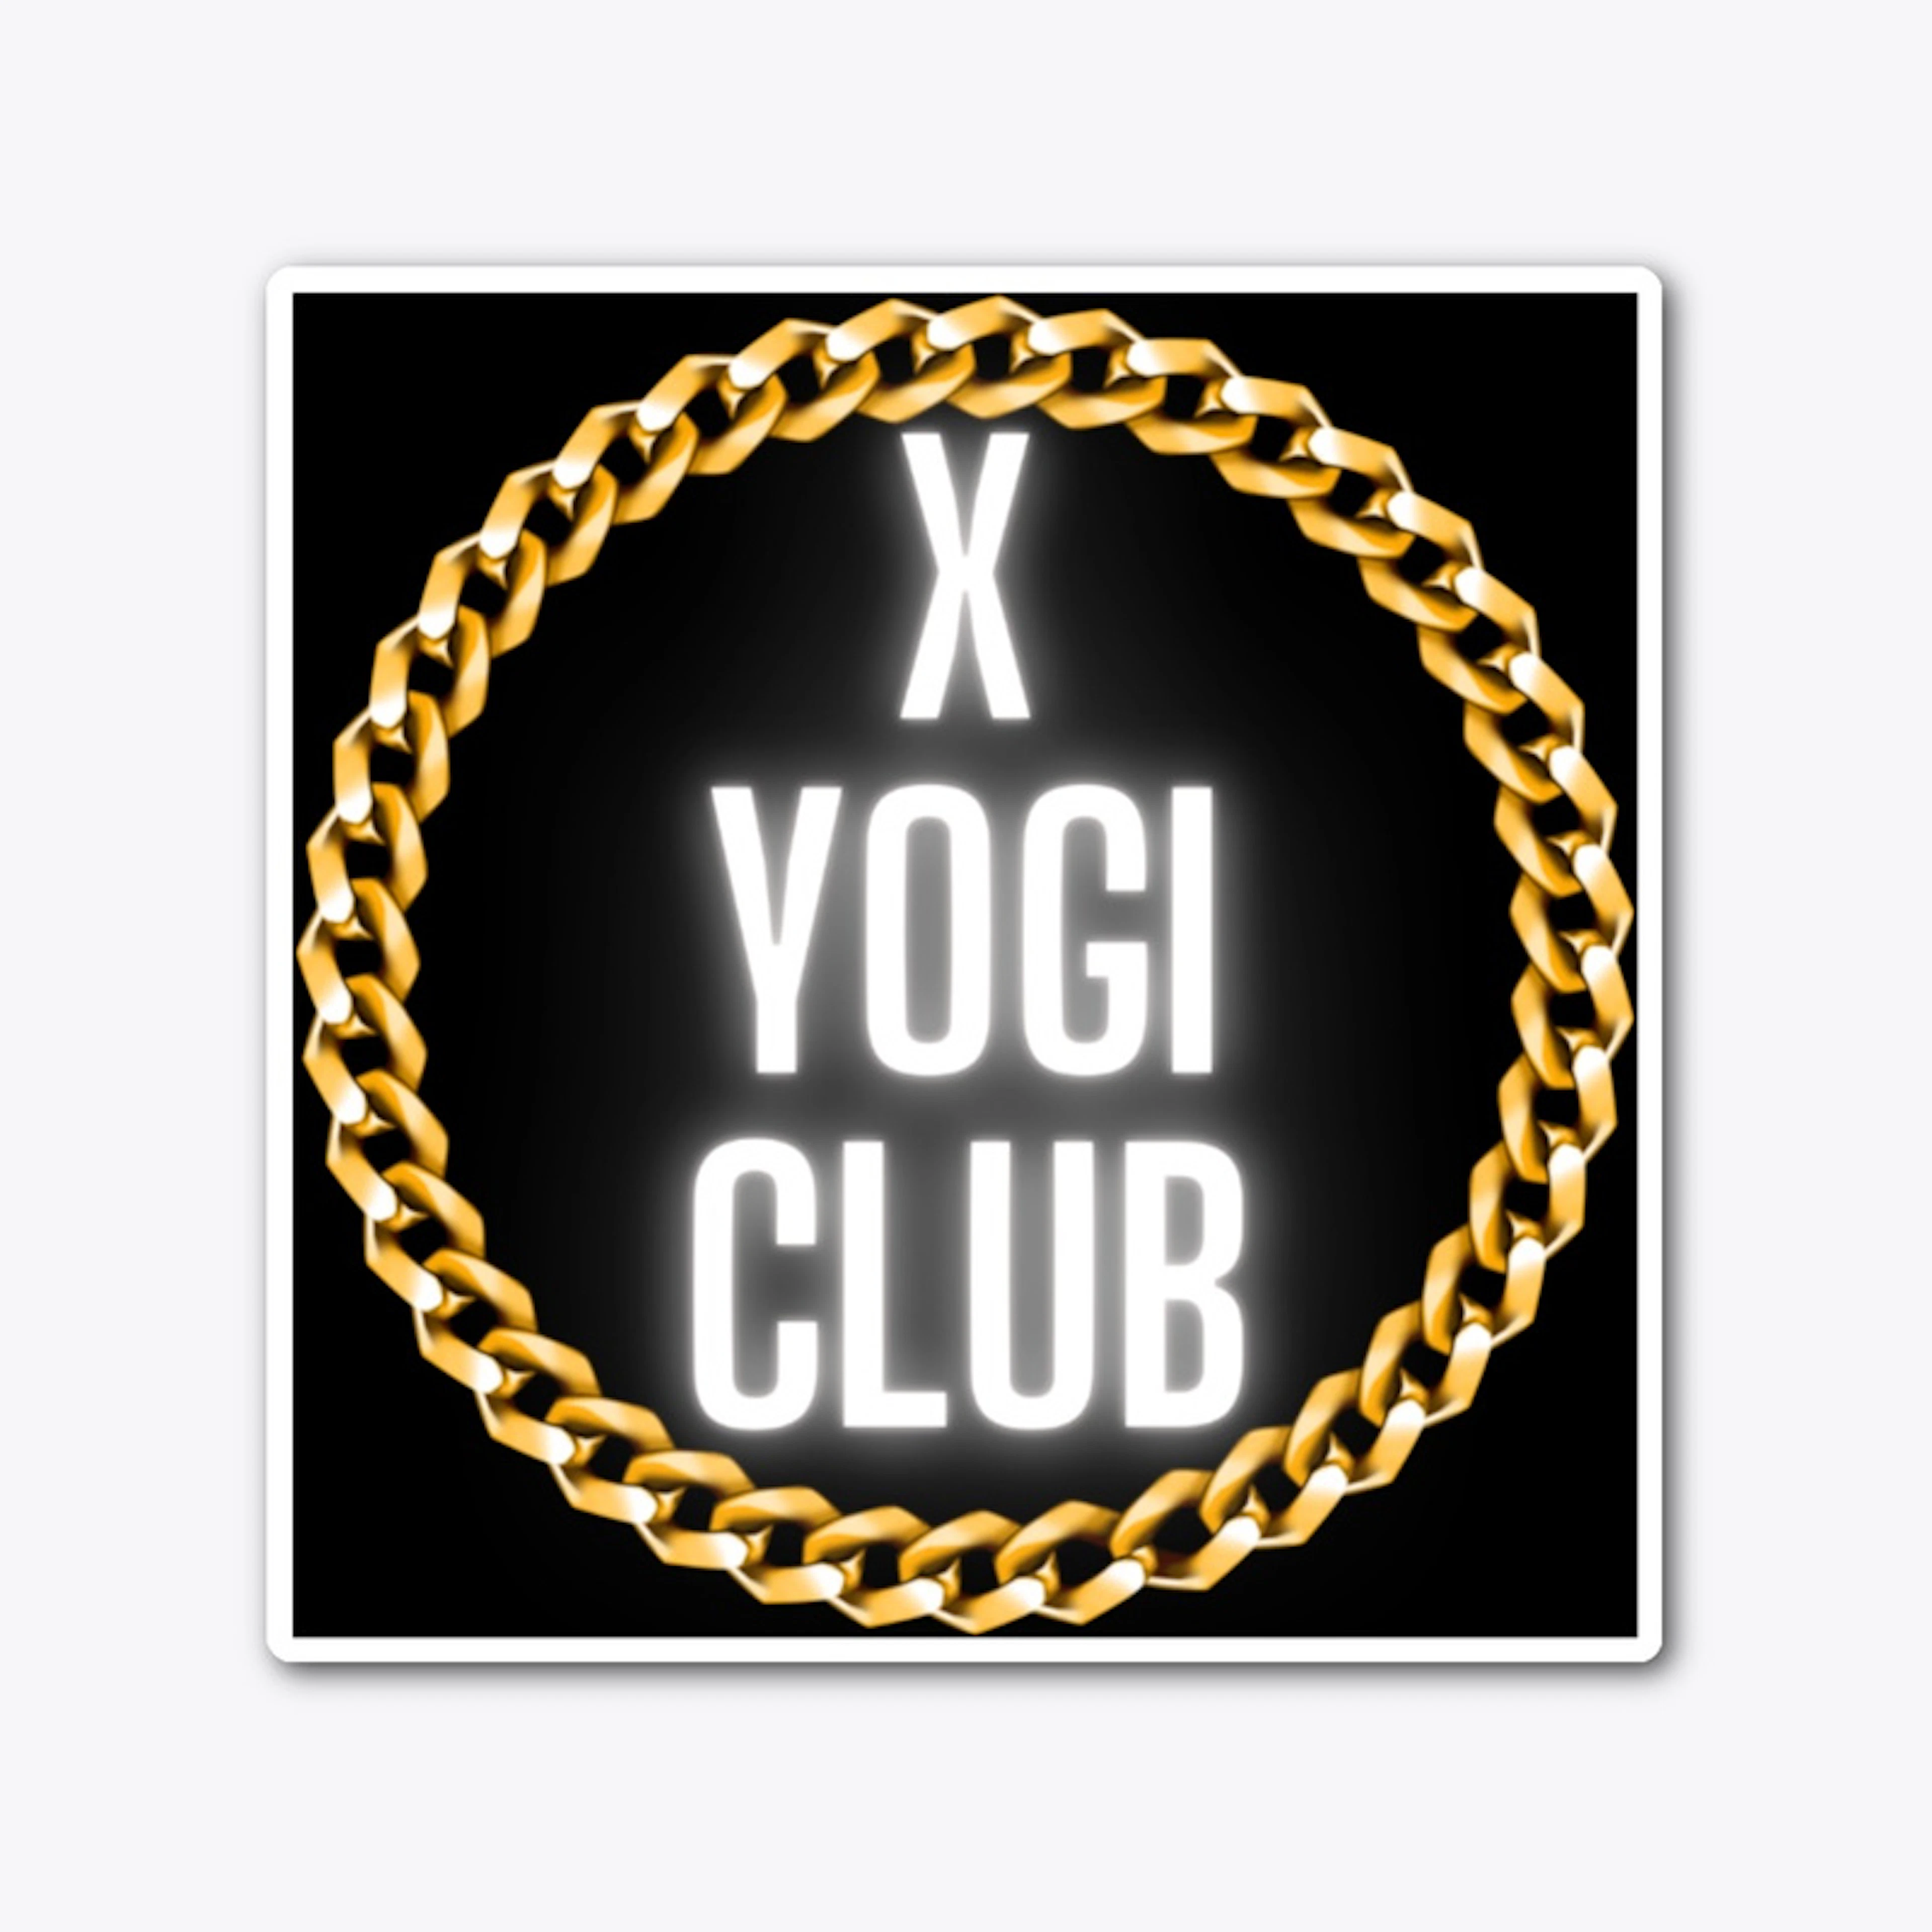 X Yogi Club